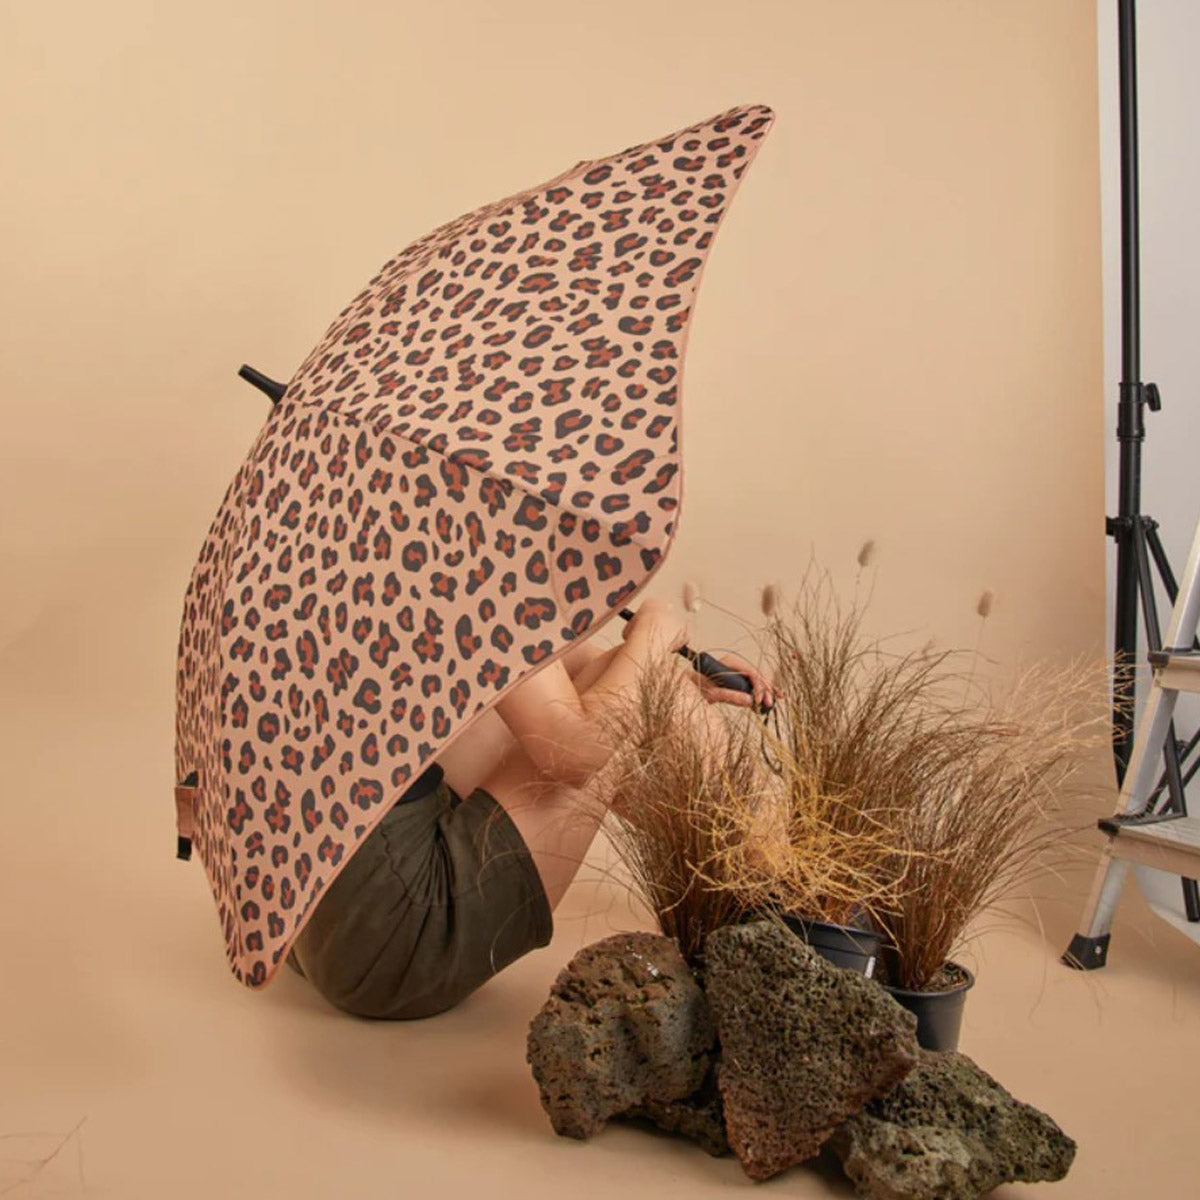 Blunt Classic 2.0 Umbrella - Leopard Safari